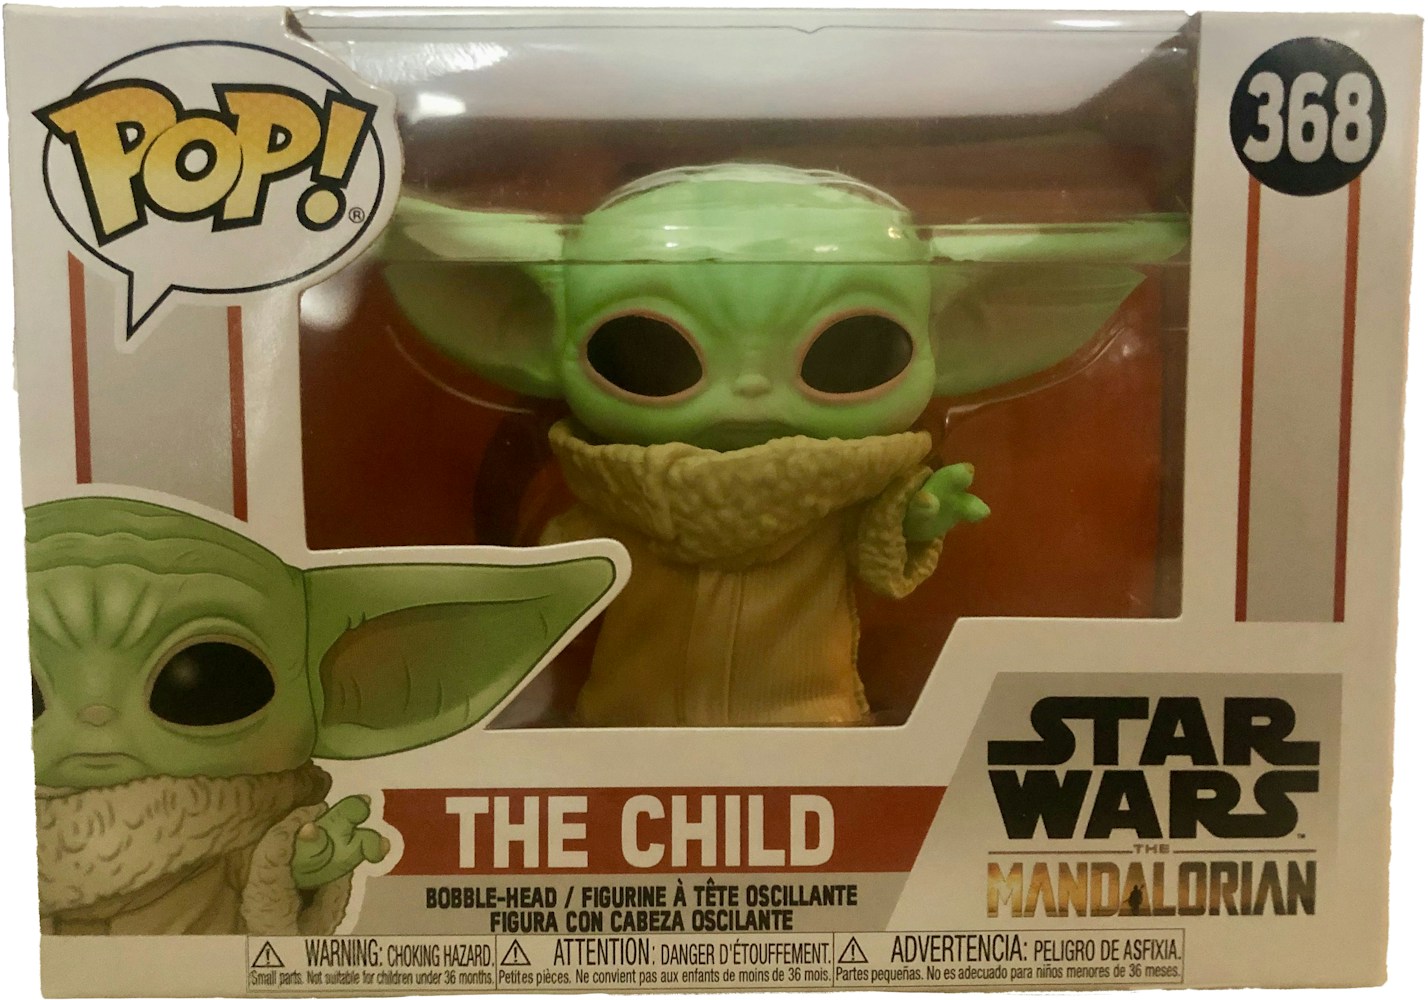 Funko Pop Star Wars The Mandalorian The Child Baby Yoda Bobble Head Figure 368